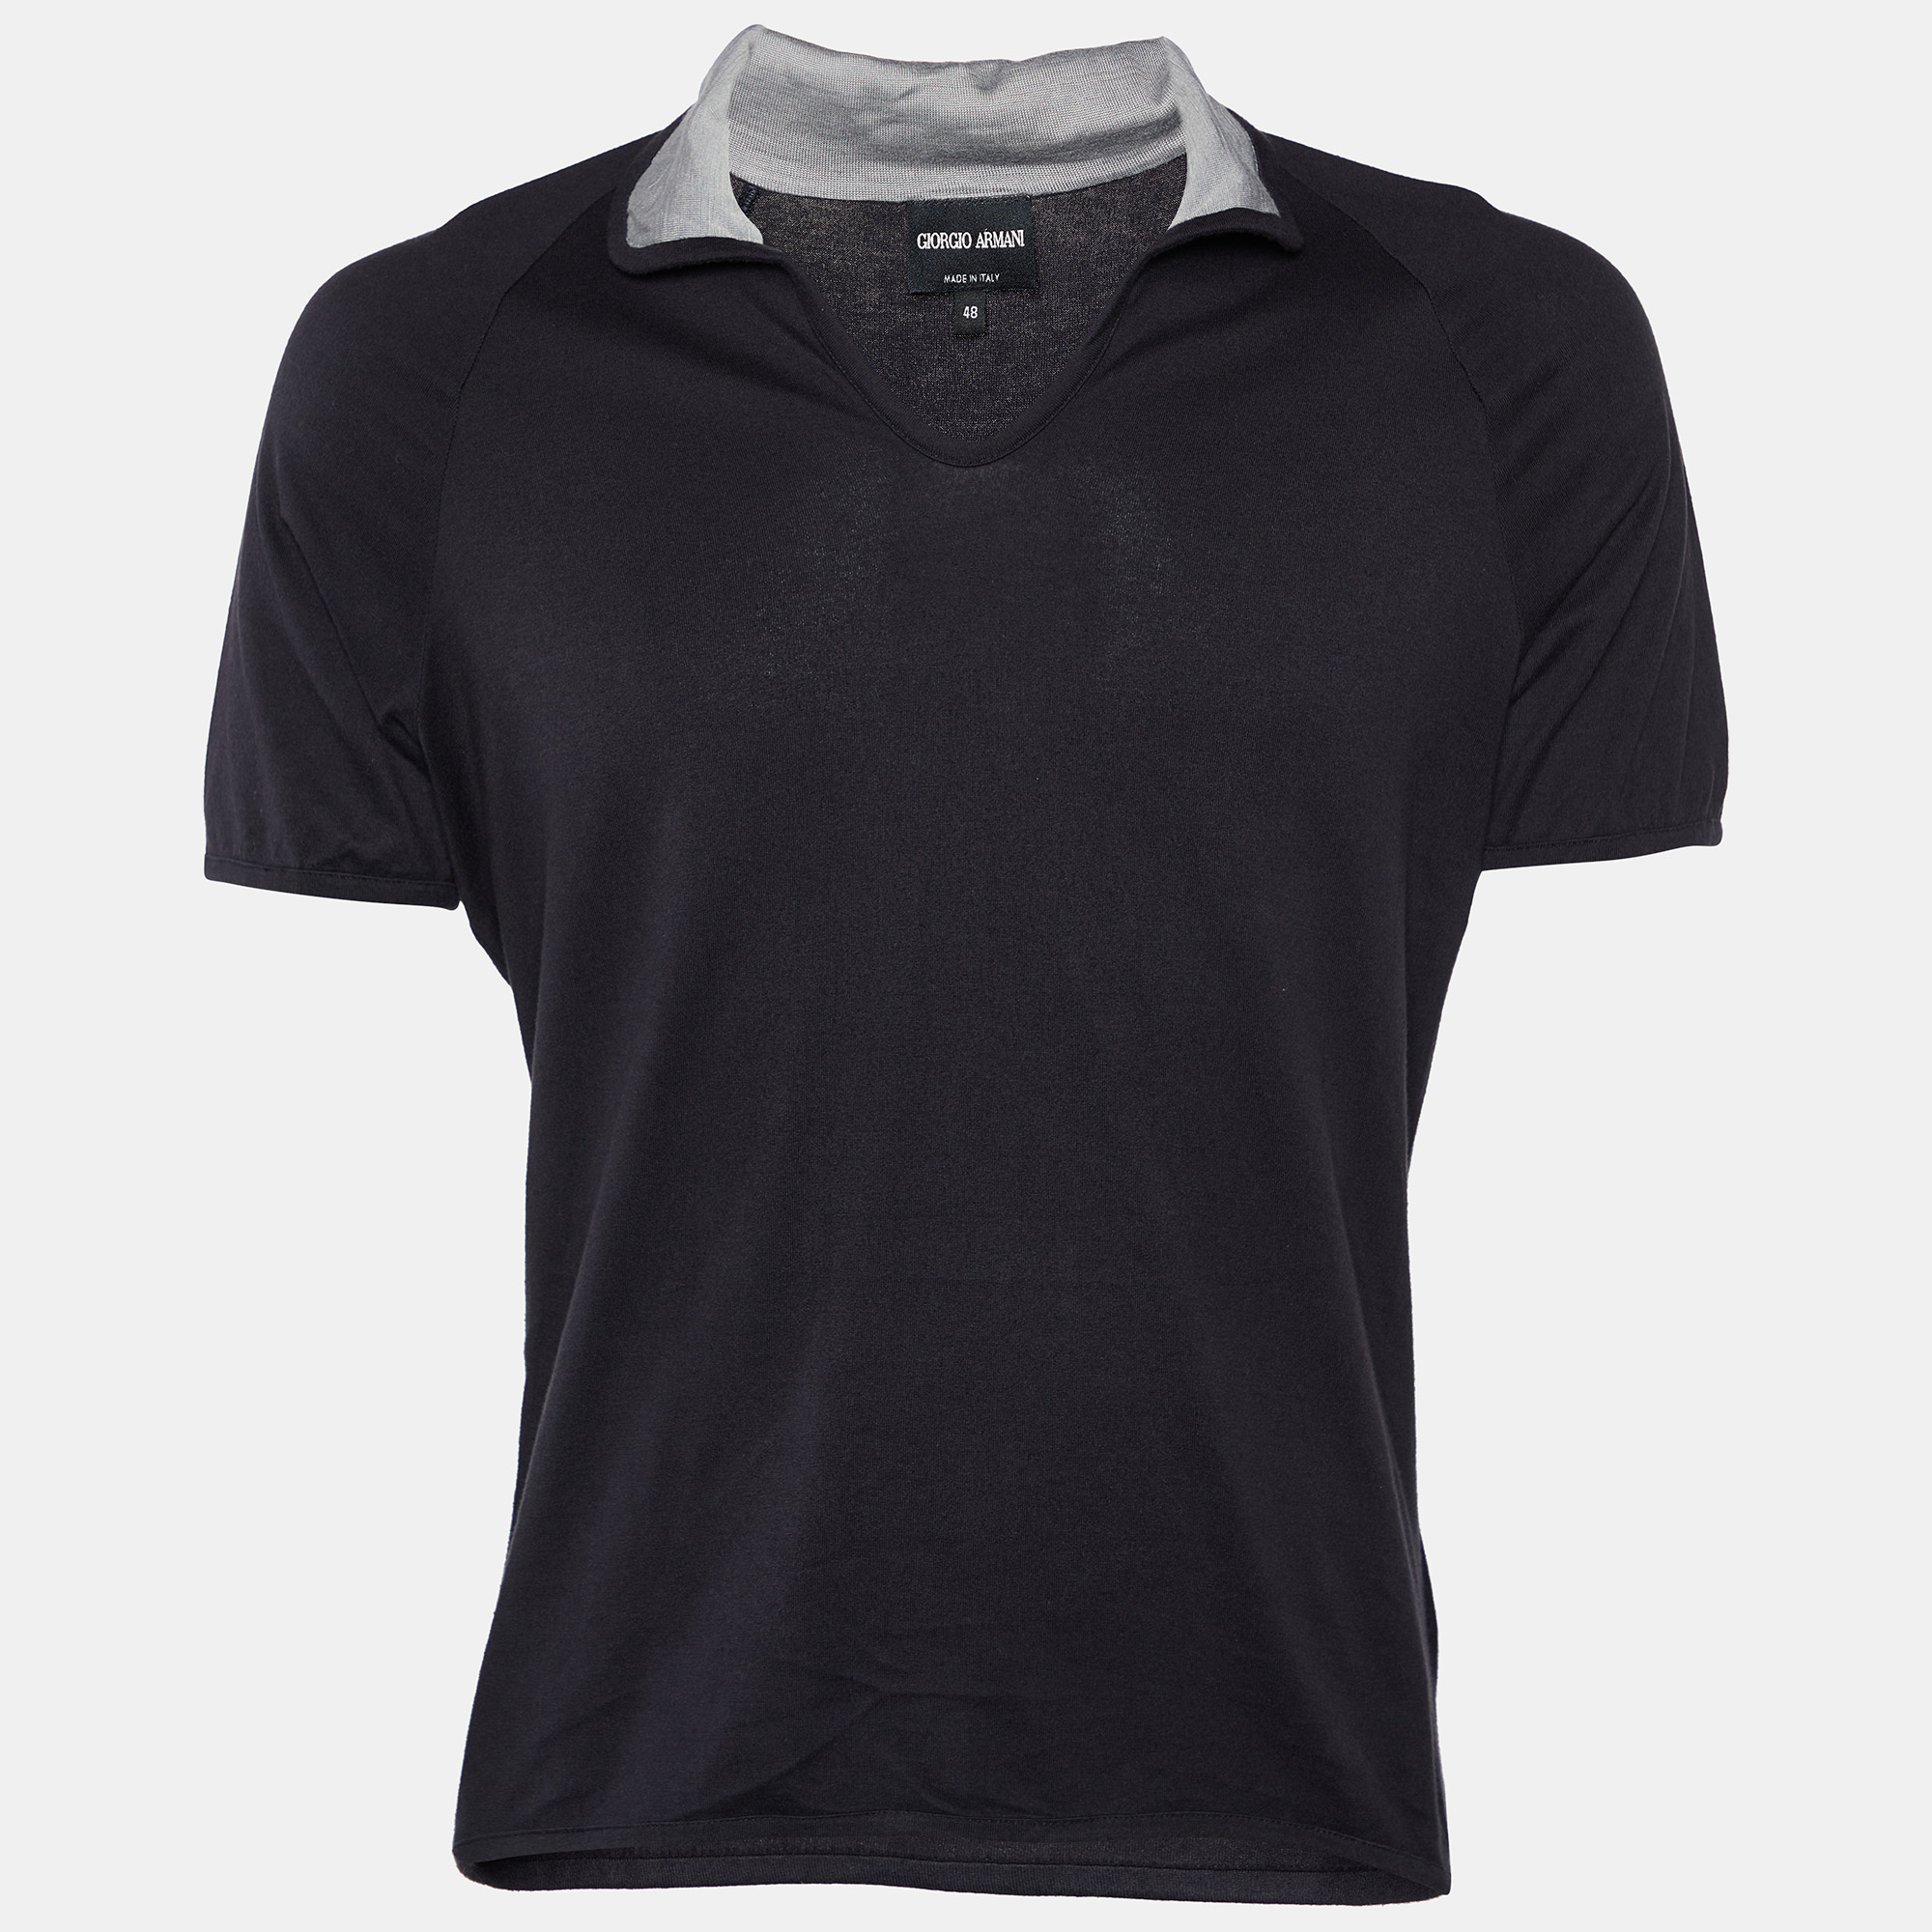 Giorgio Armani Black Cotton Knit Contrast Collar Detail T-Shirt M